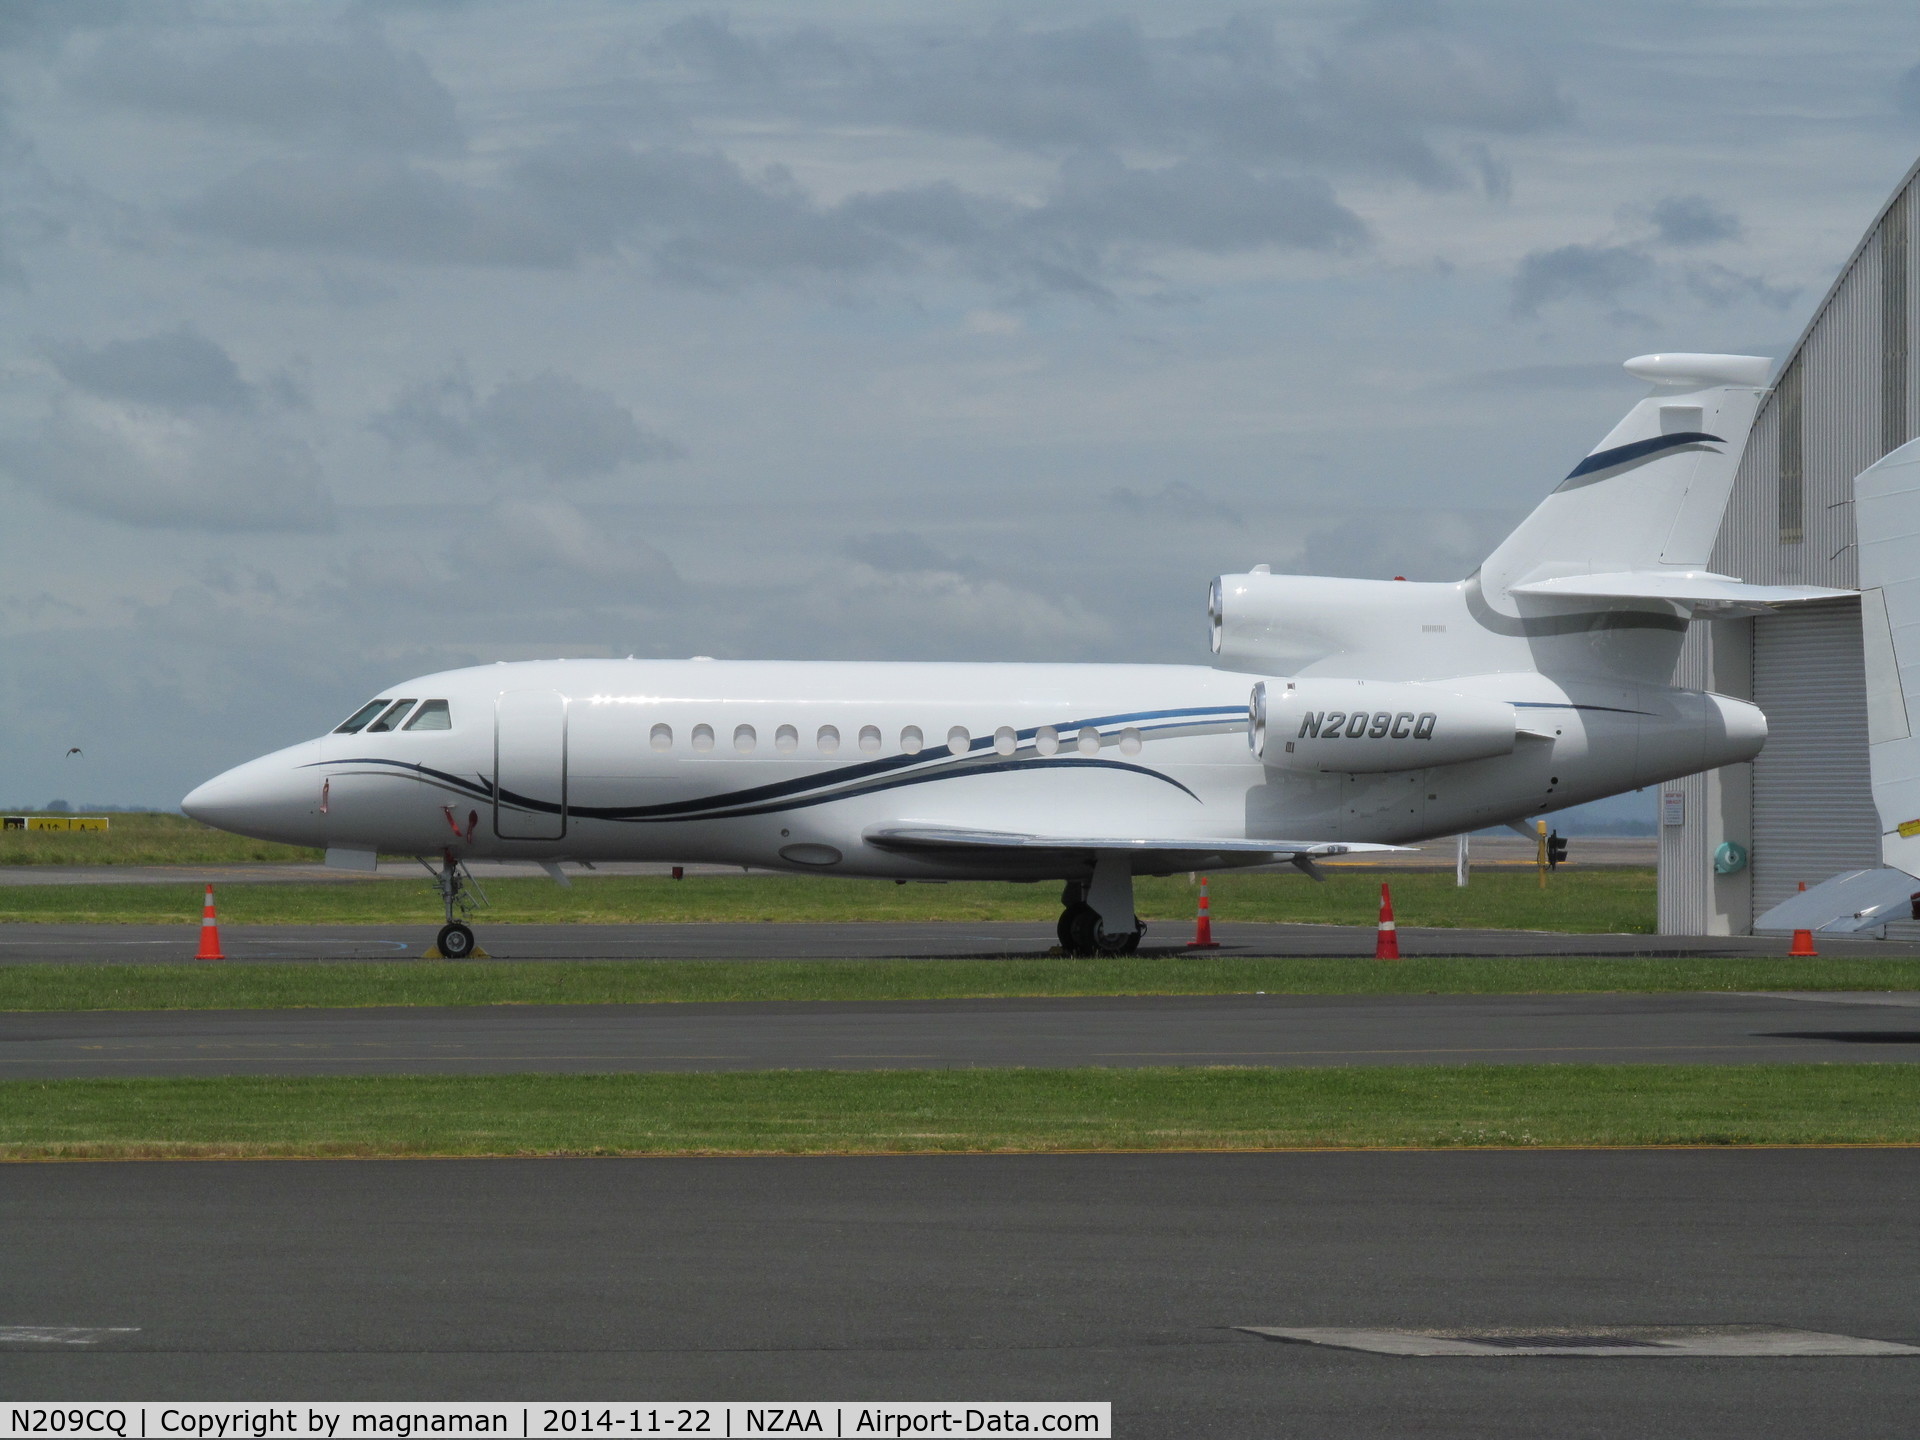 N209CQ, 2001 Dassault Falcon 900EX C/N 98, Touring NZ at moment